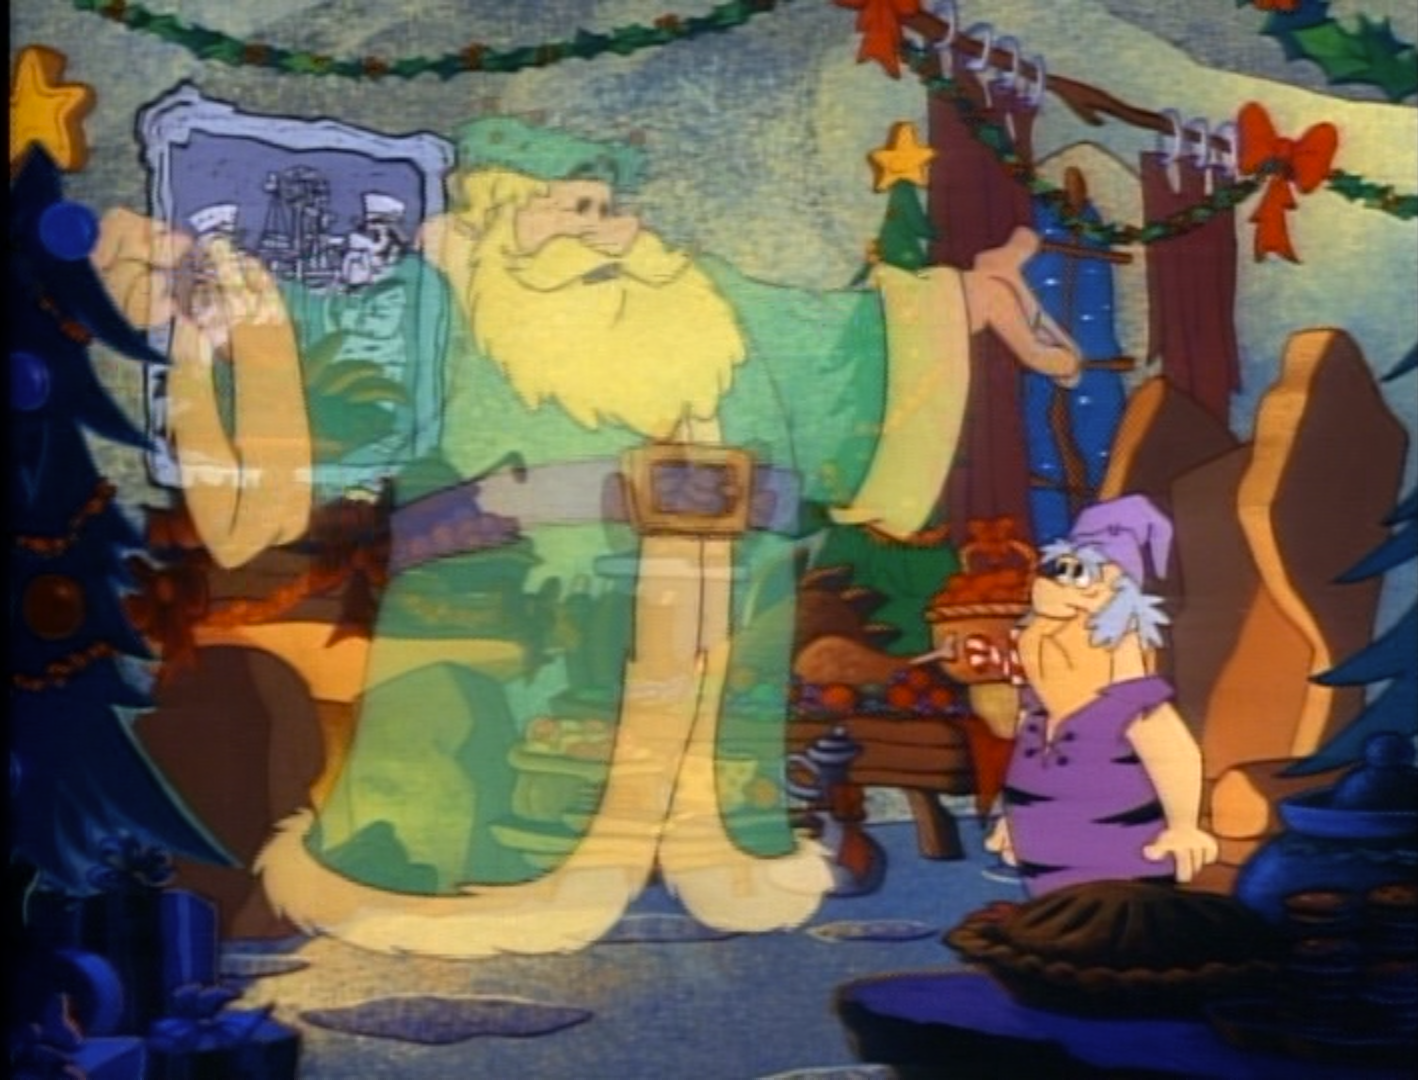 Holiday Film Reviews A Flintstones Christmas Carol